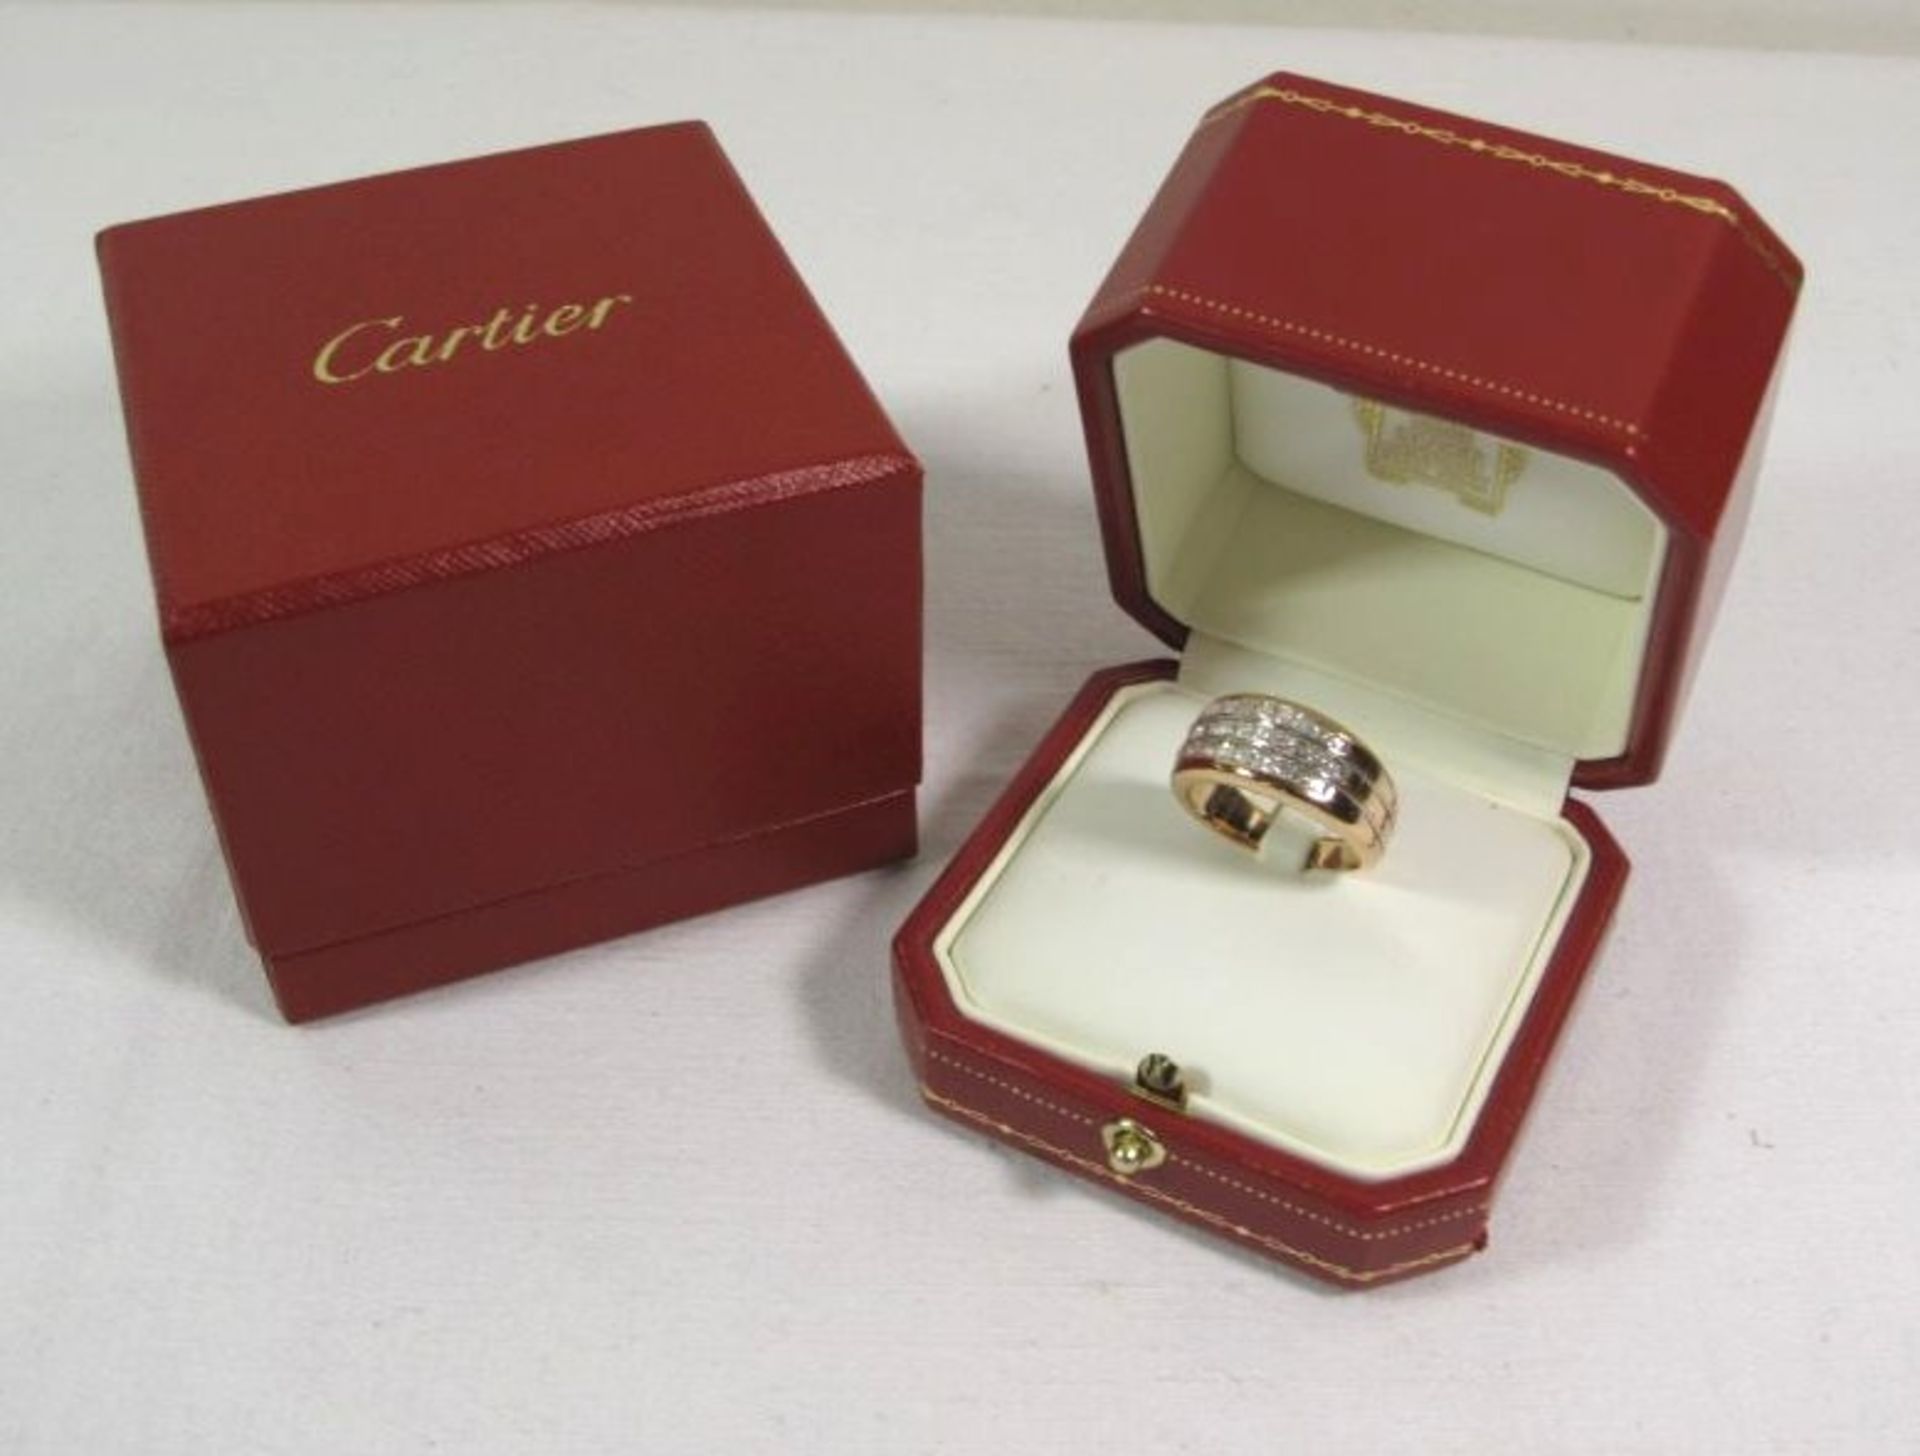 schöner Ring "Cartier", Boréal, 750er Roségold mit 25 Brillanten zus. 1,65ct, ca. 10,1g, Ringgr. 60,